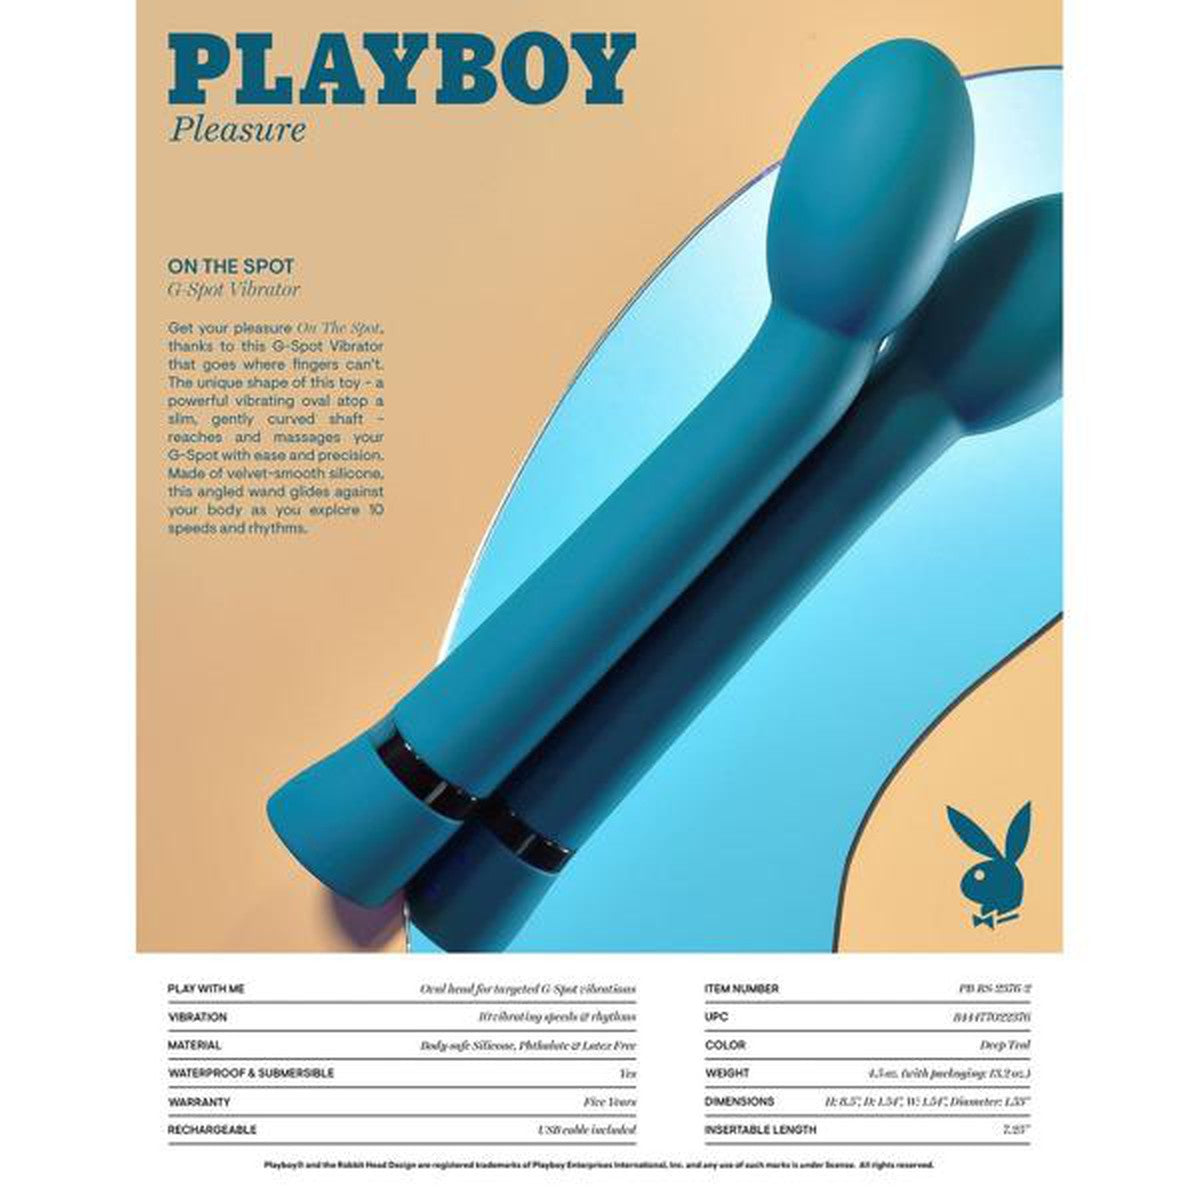 Playboy On The Spot G-Spot Vibrator